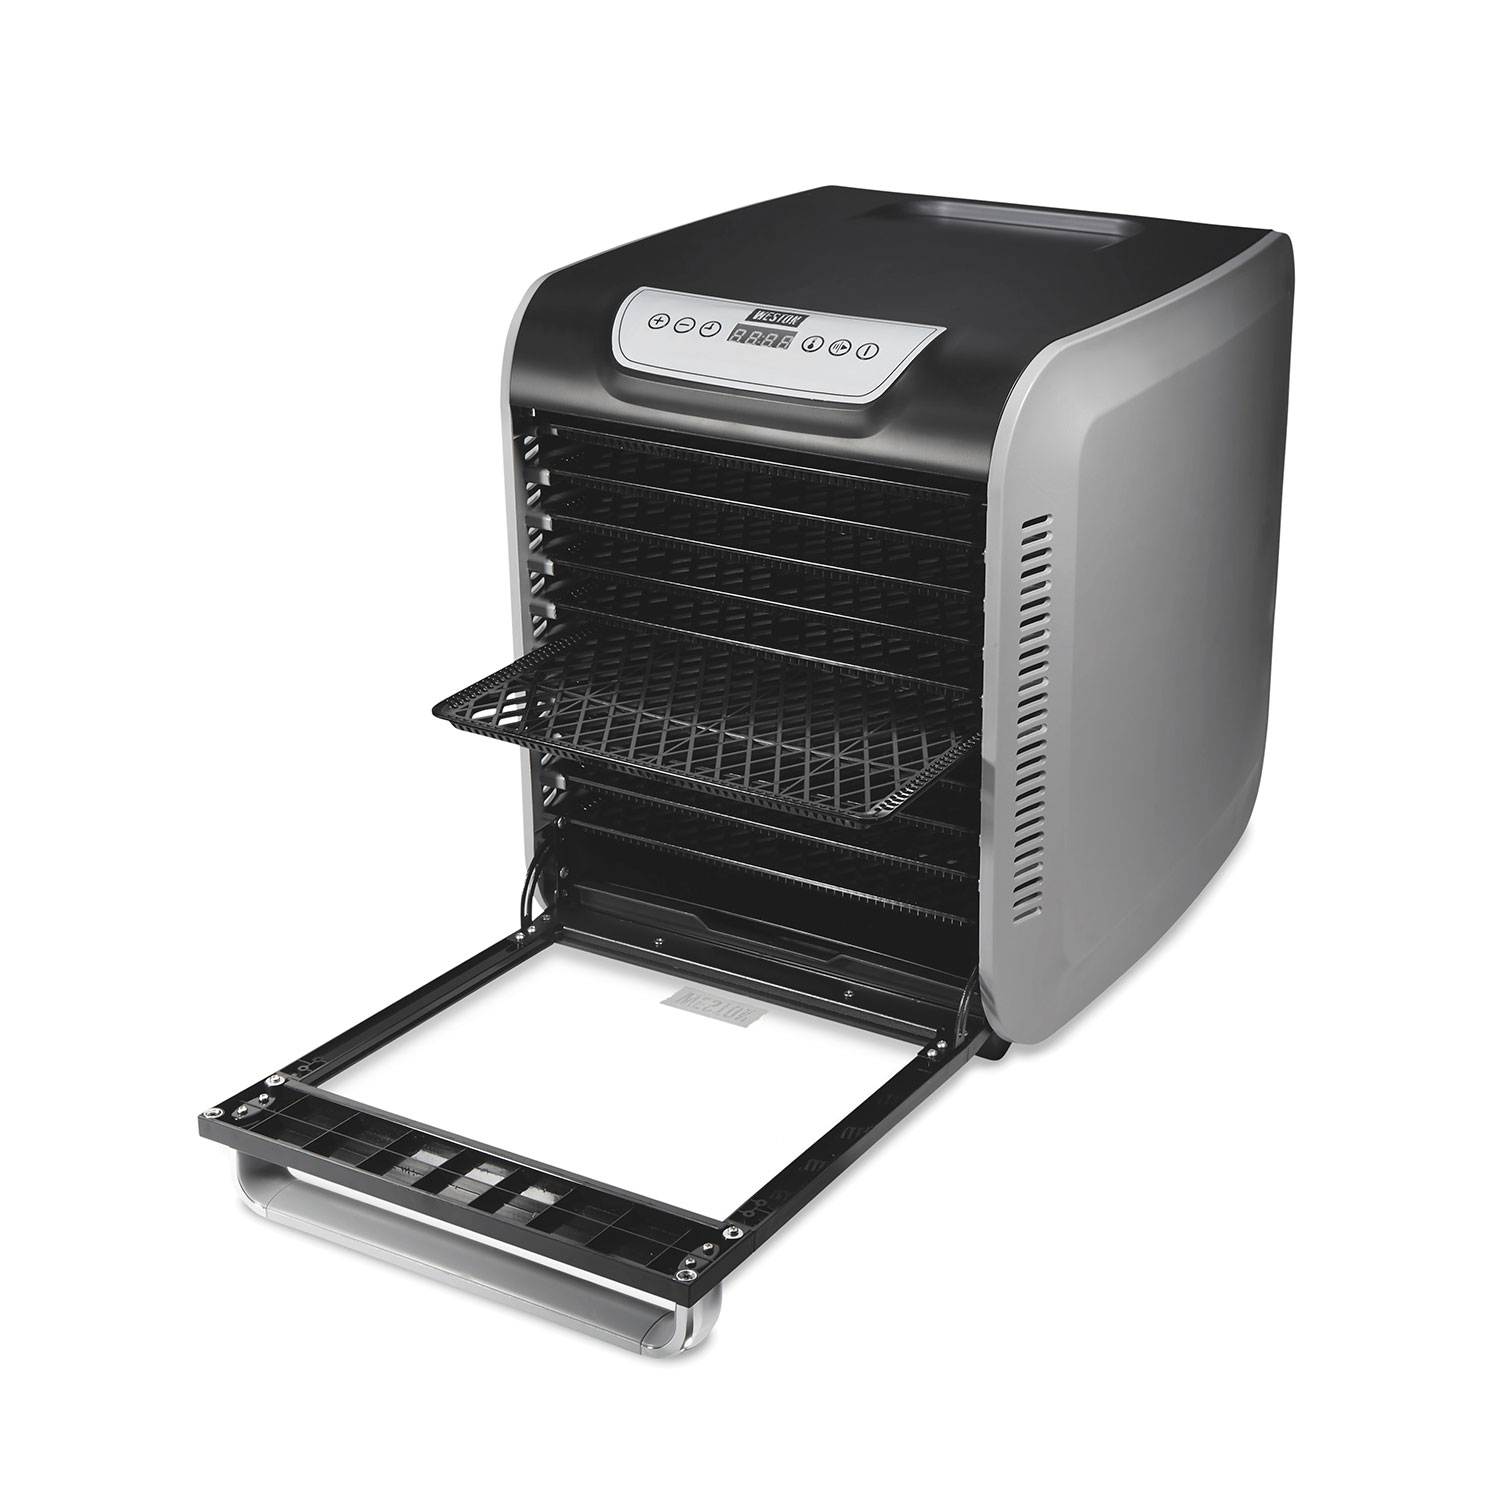 Weston® 10 Tray Digital Food Dehydrator with Oven-style Door (75-1001-W)